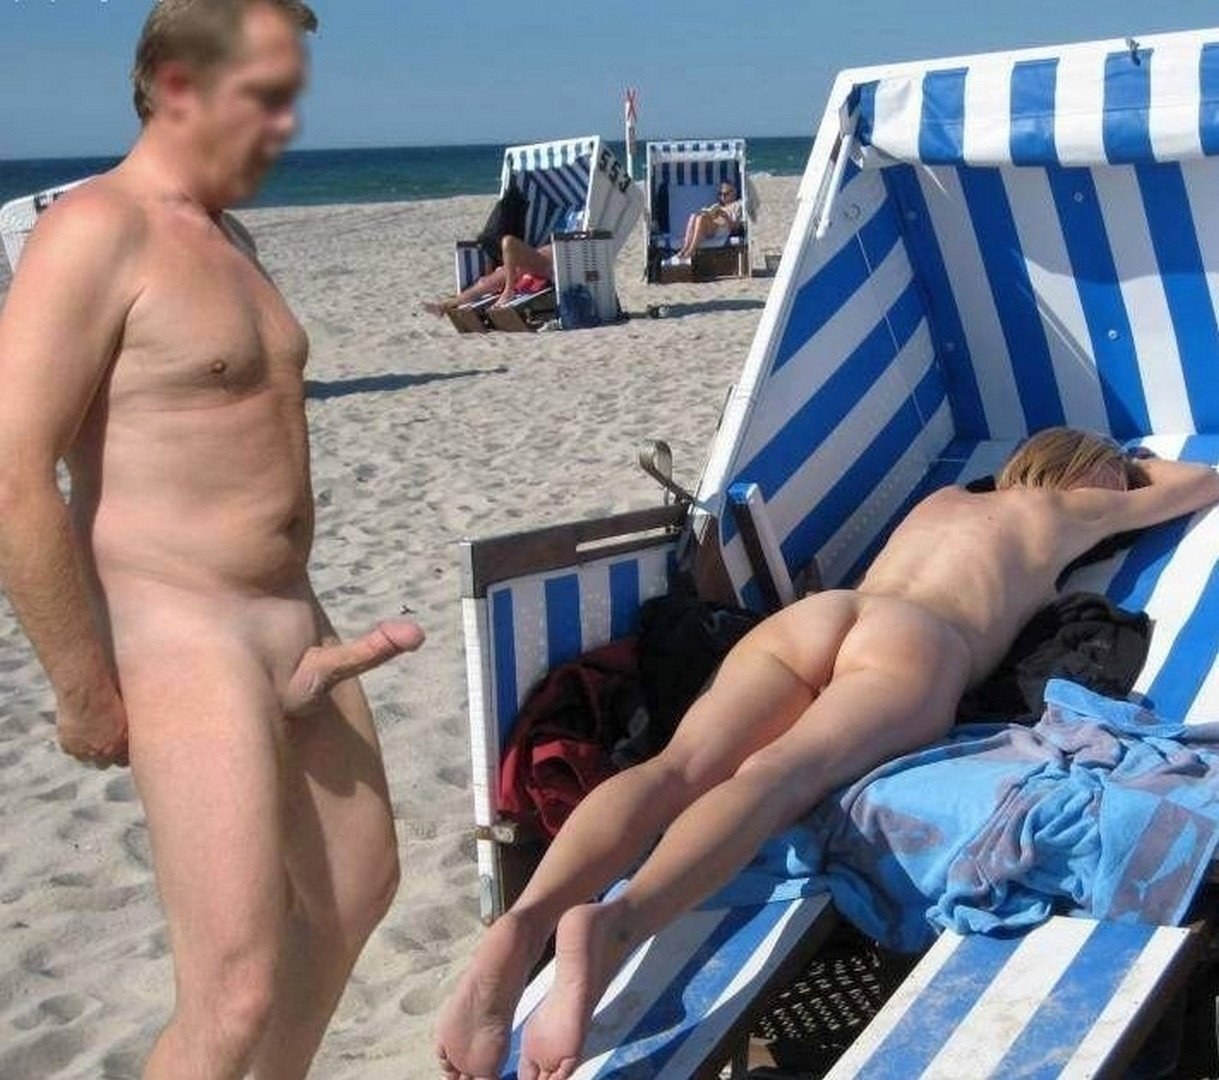 https://pichunter.club/uploads/posts/2022-12/1671045606_38-pichunter-club-p-porn-erection-on-a-nudist-beach-40.jpg